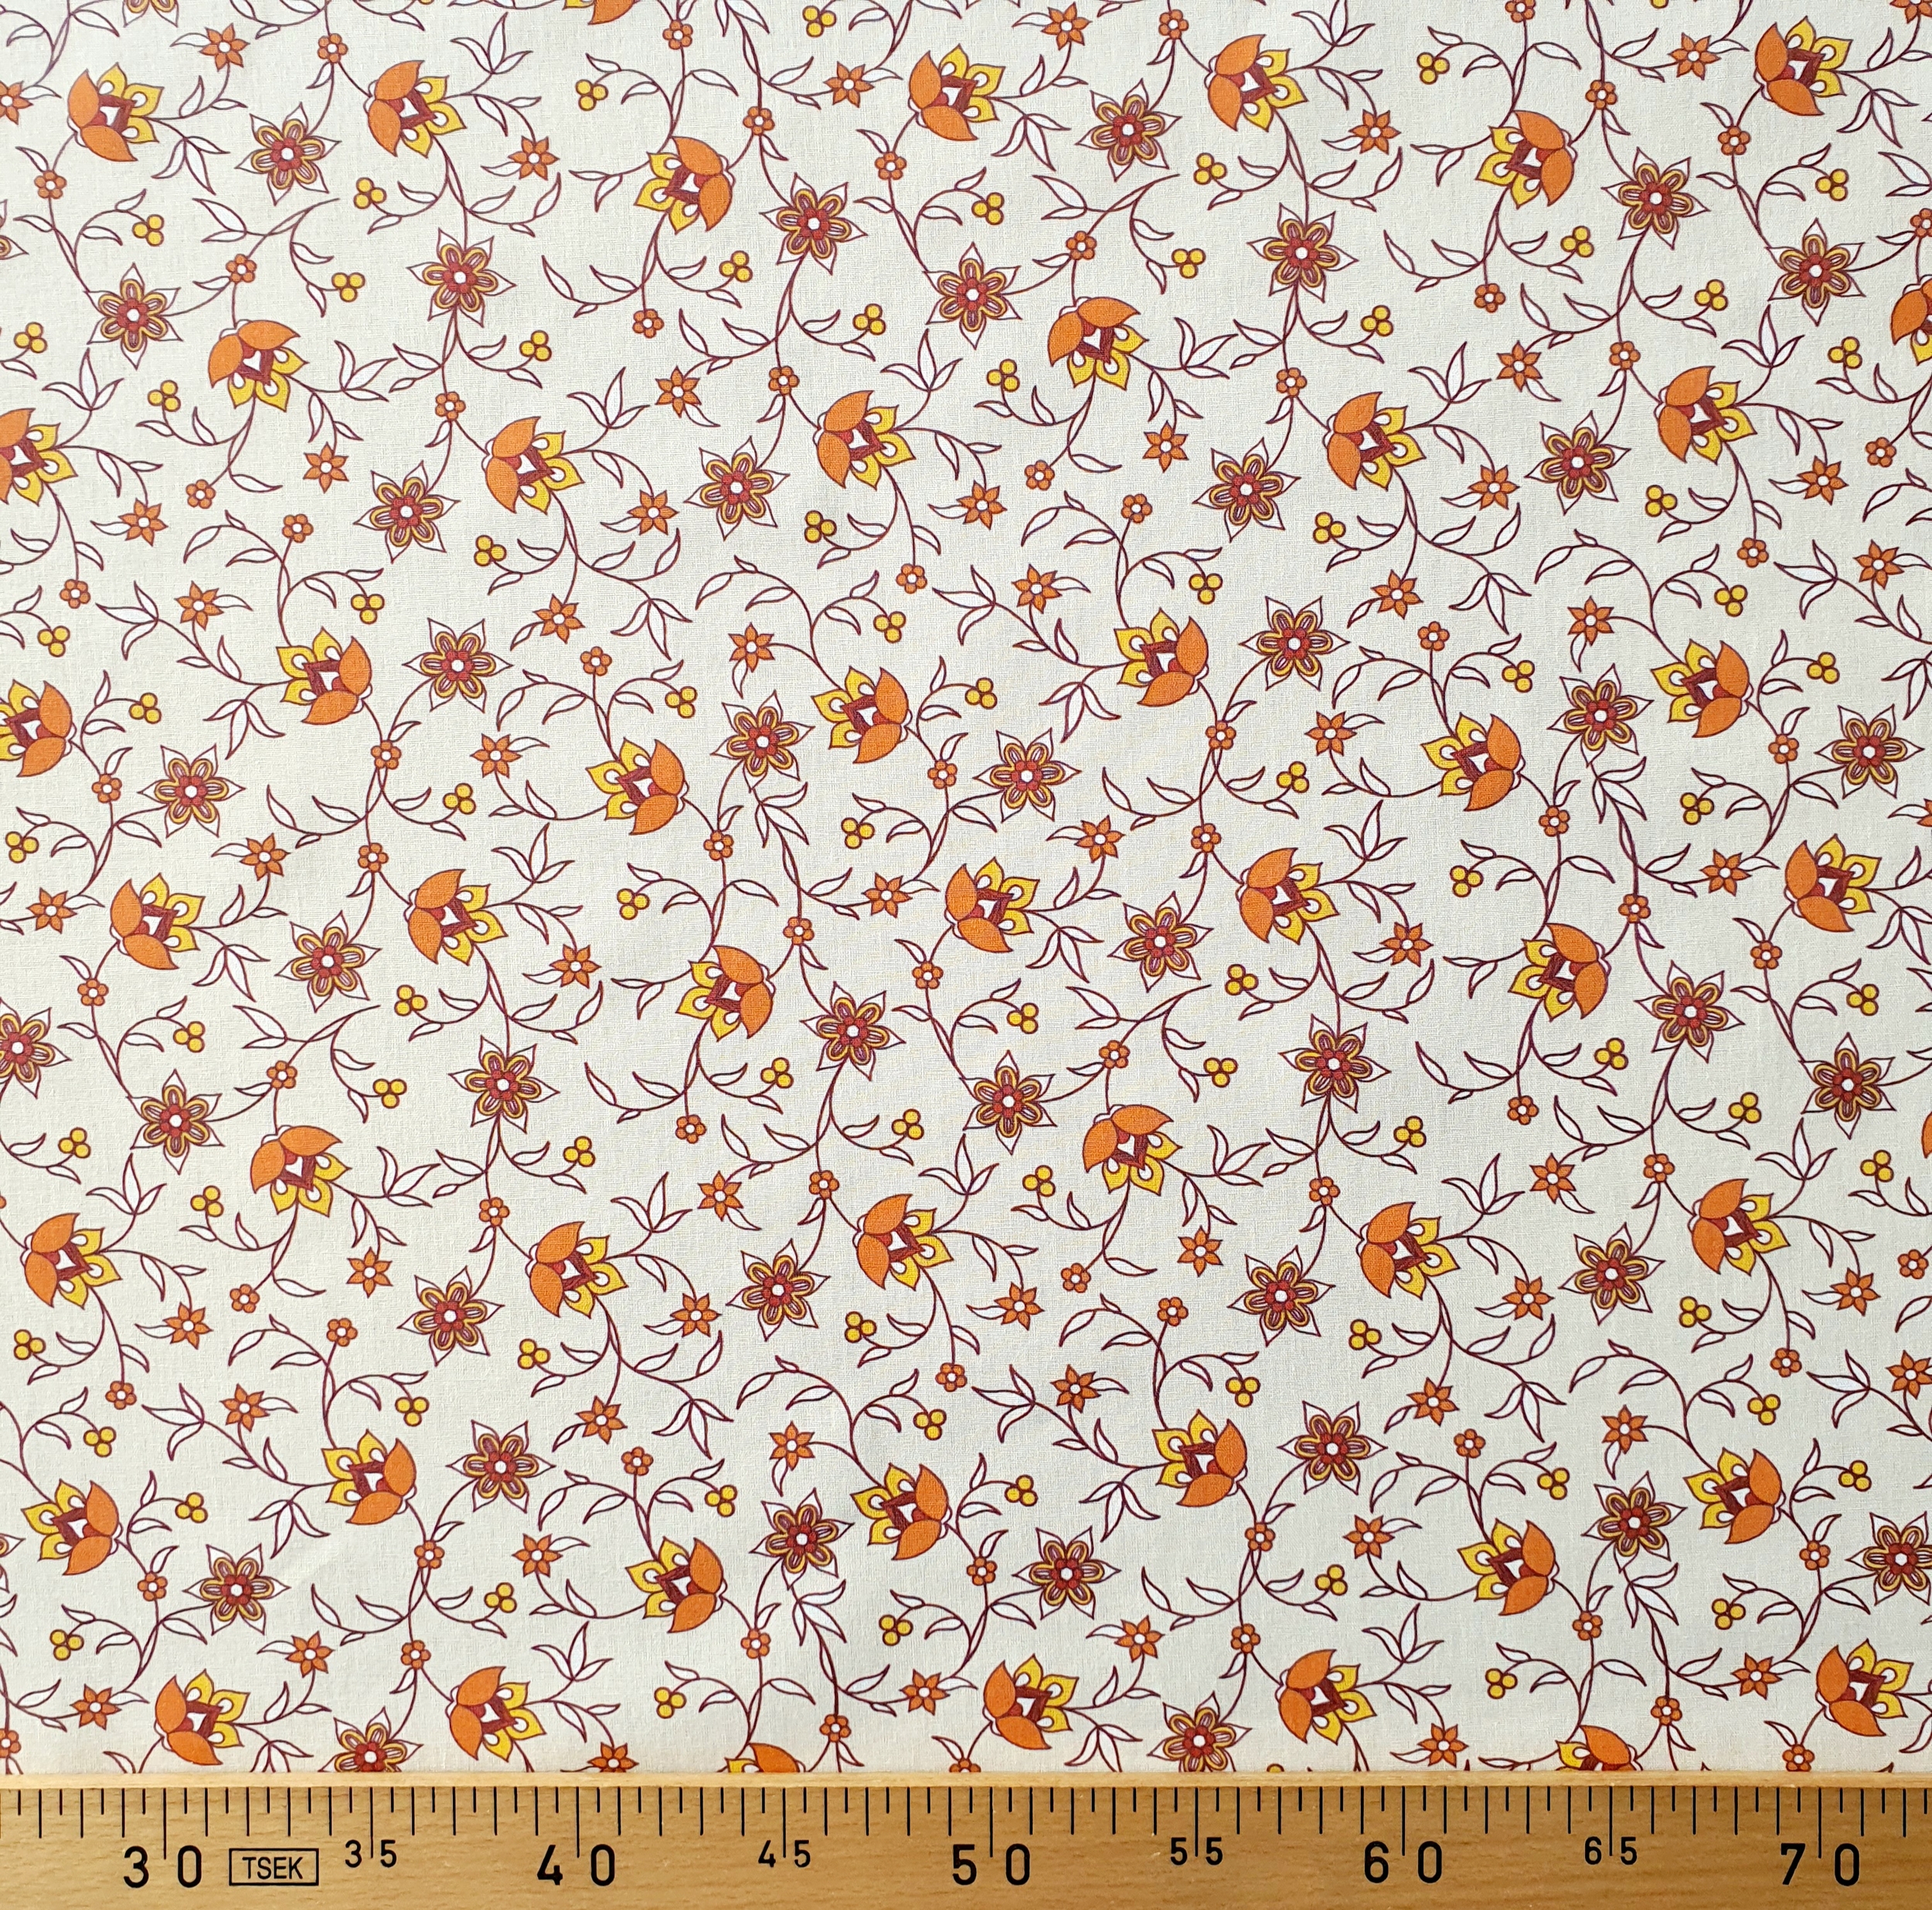 Tissu coton beige fleur orange rétro (2)